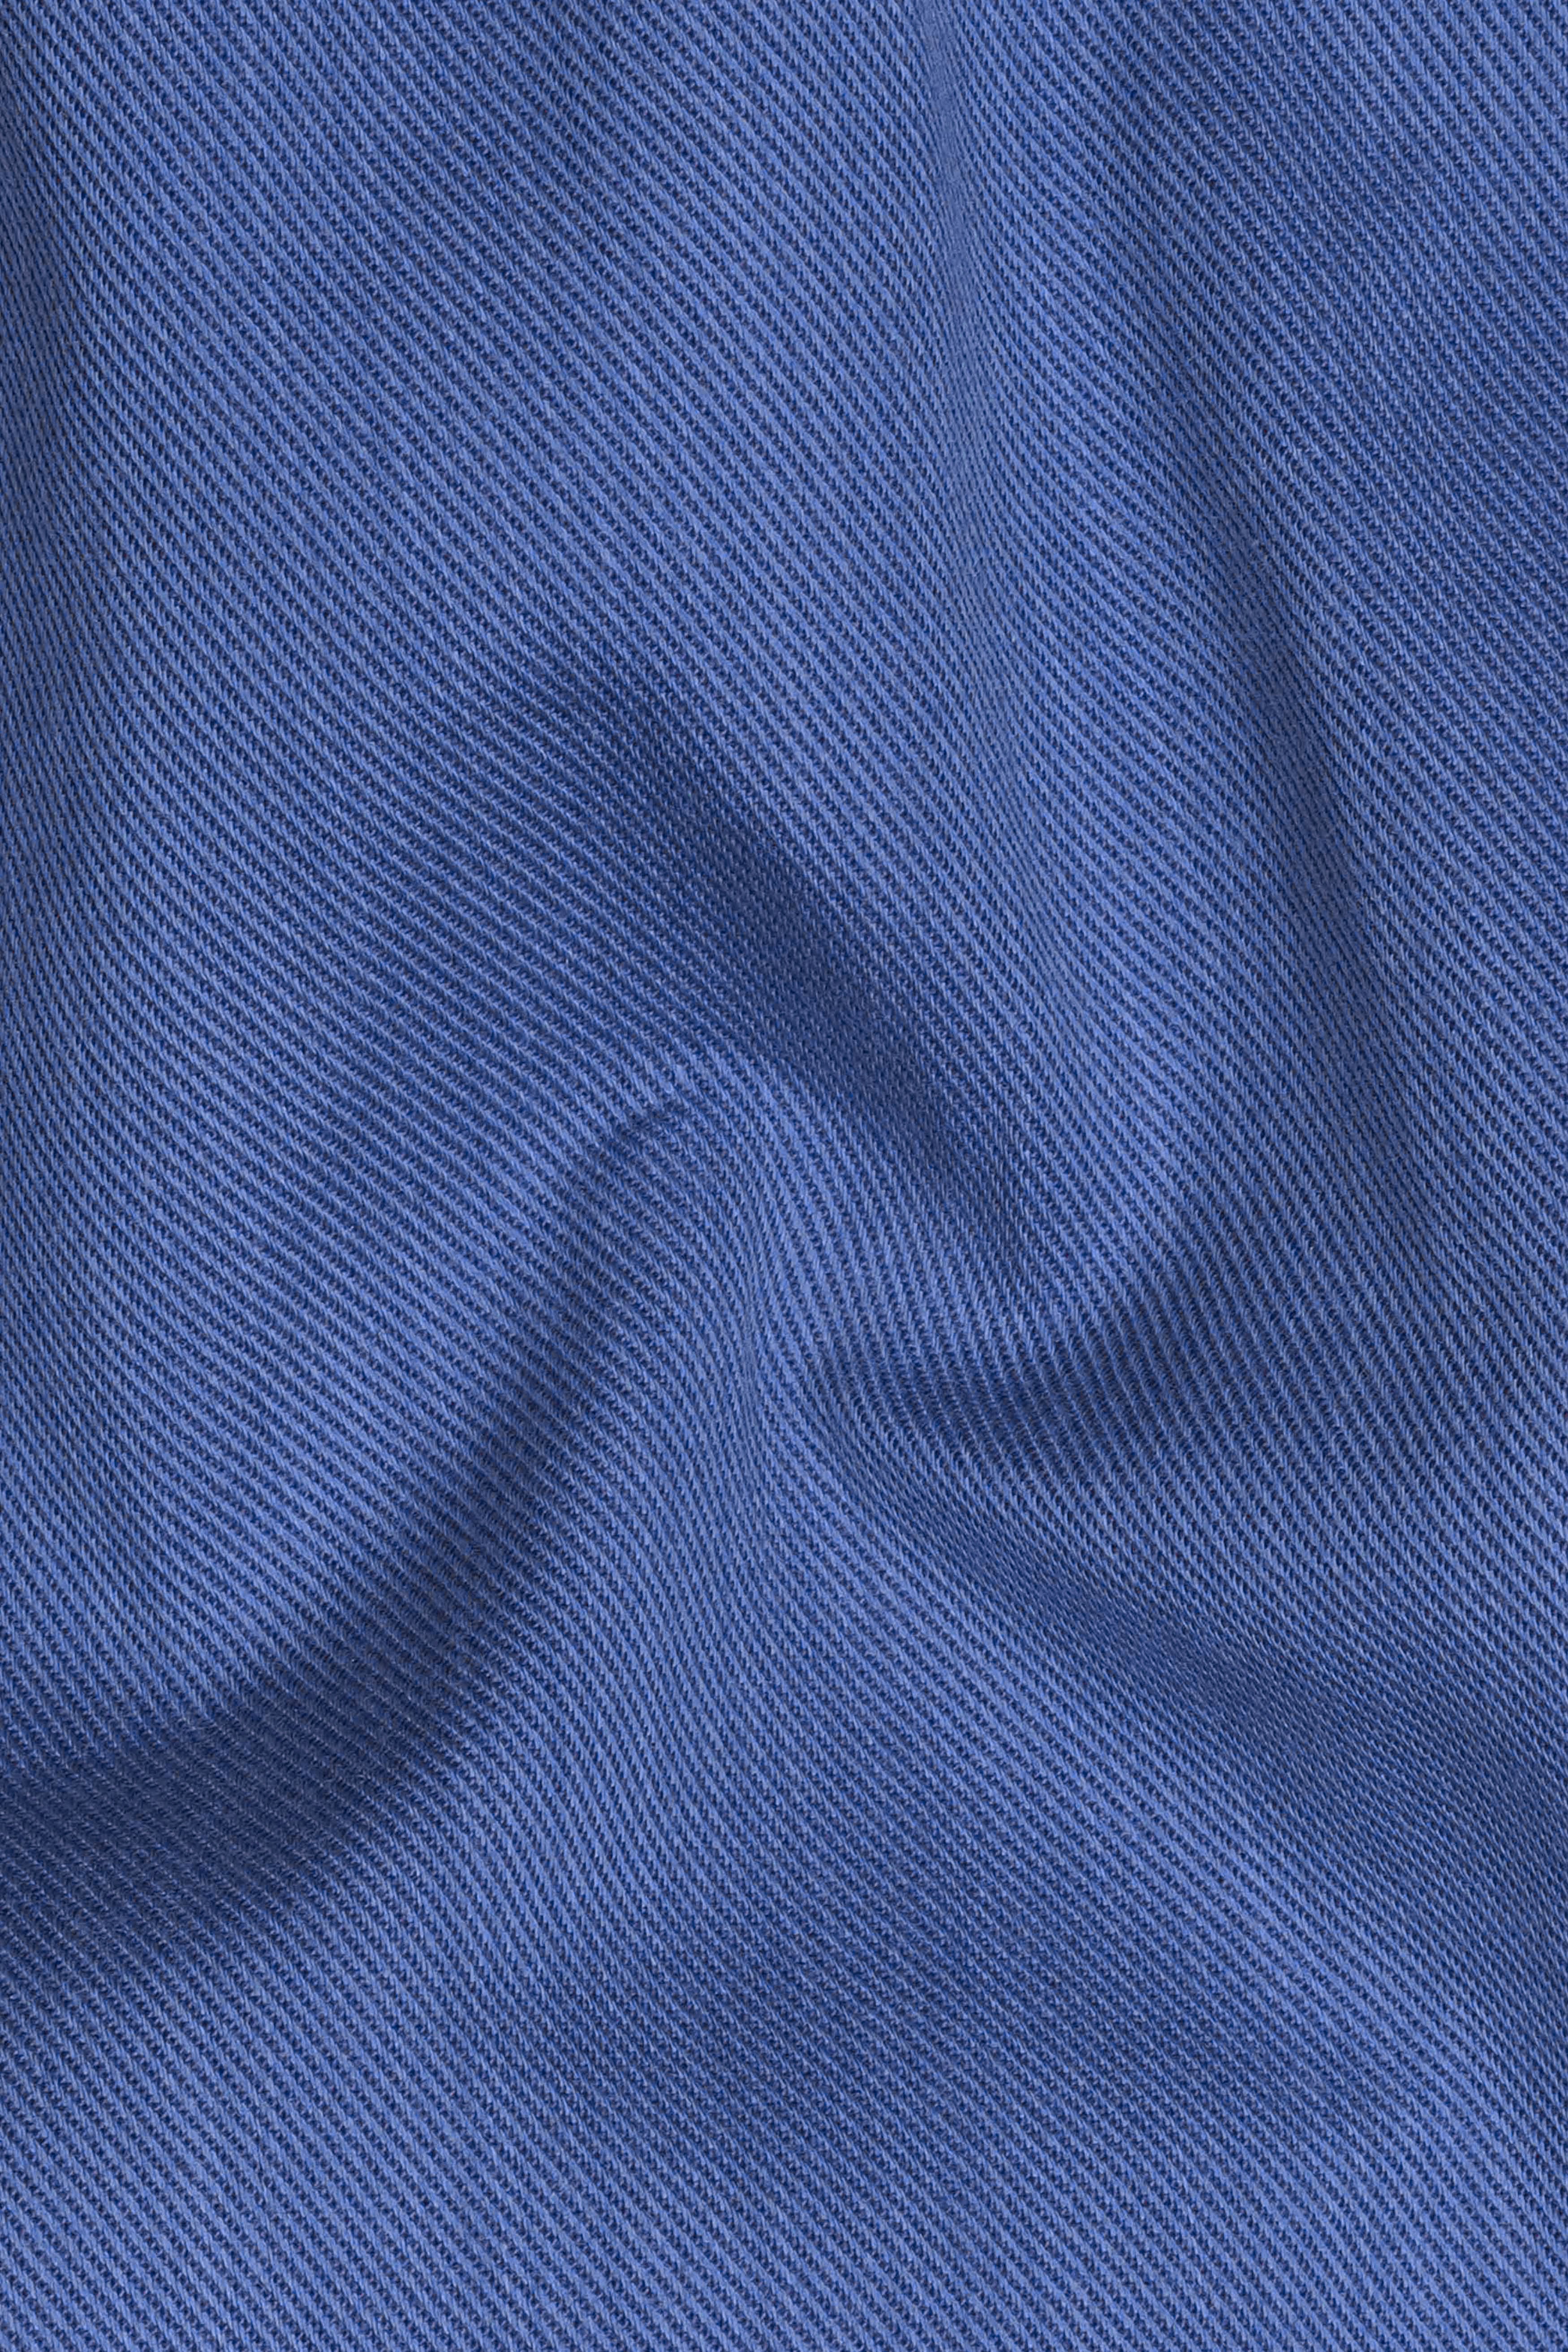 Twilight Blue Premium Cotton Pant